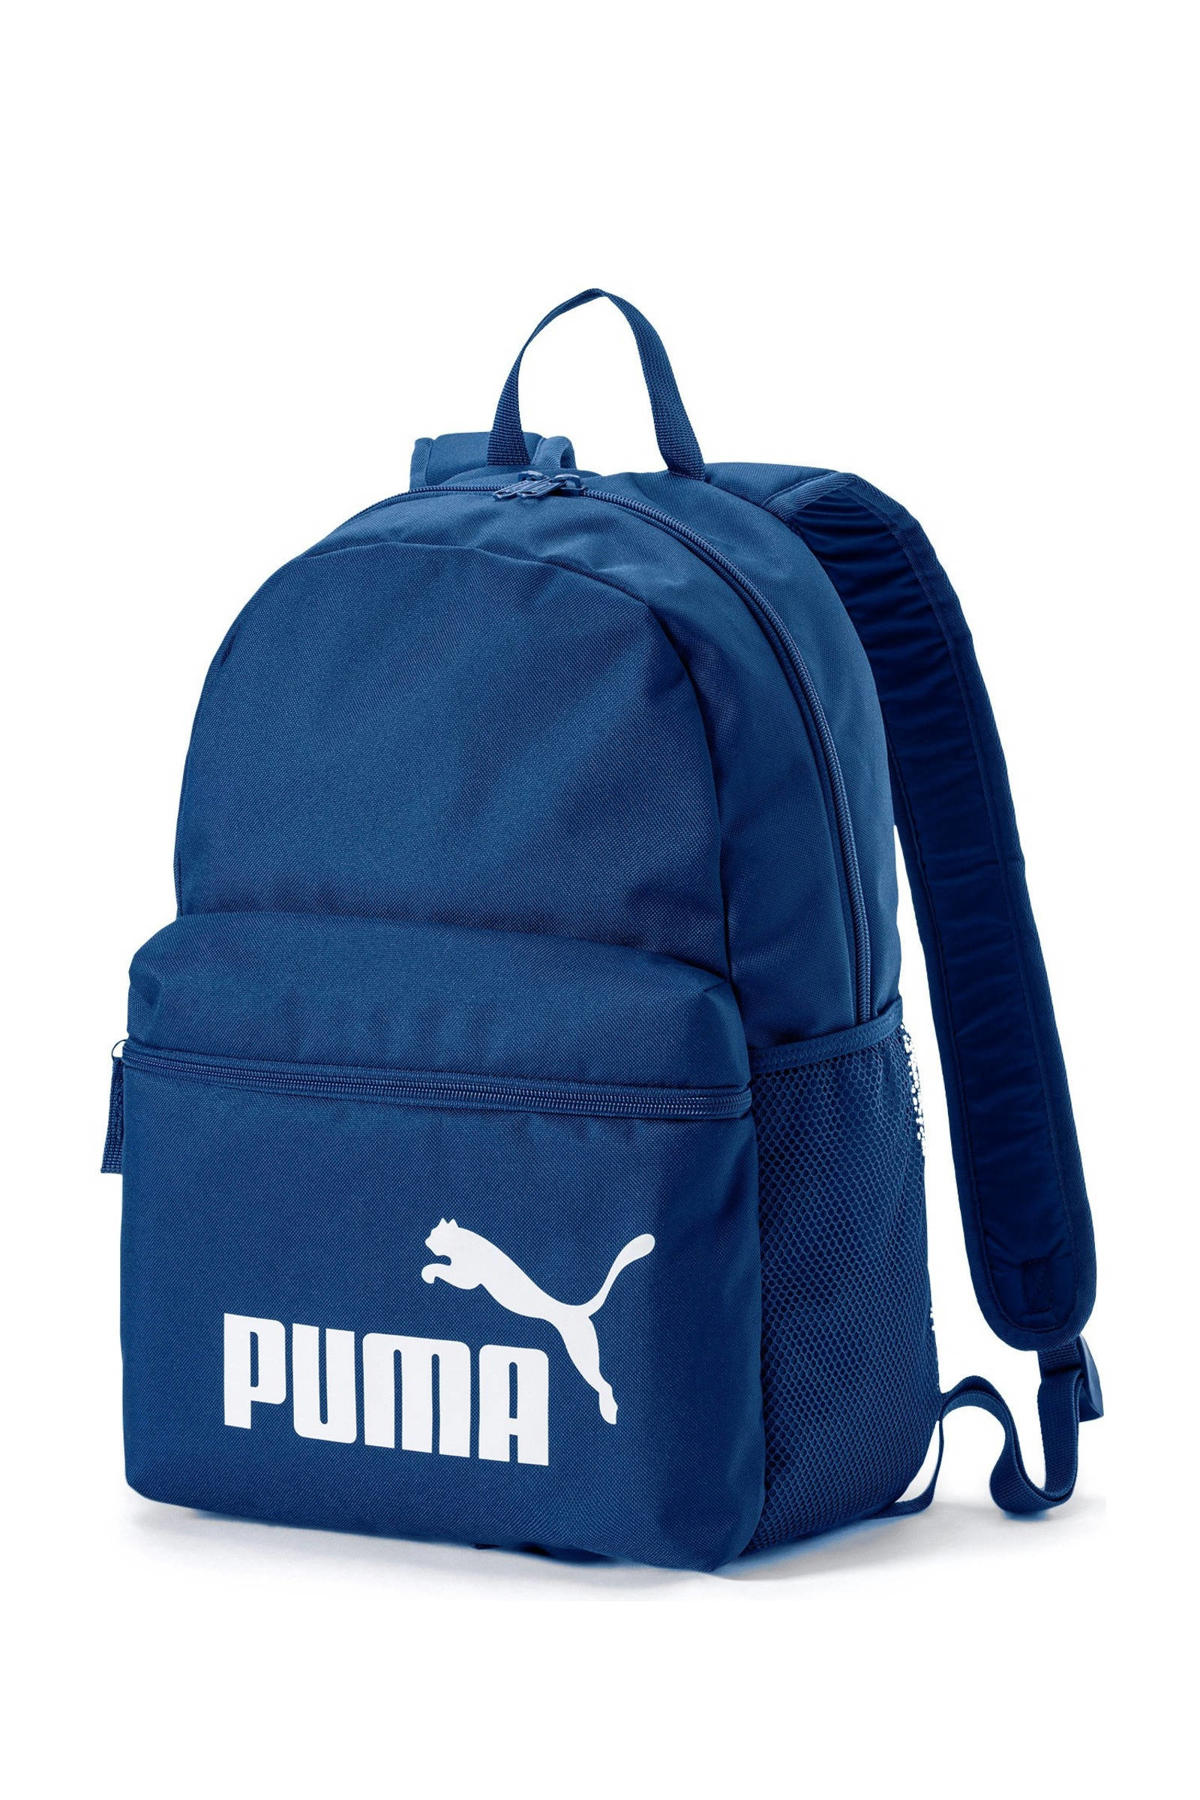 bescherming groentje kleermaker Puma Phase rugzak blauw | wehkamp